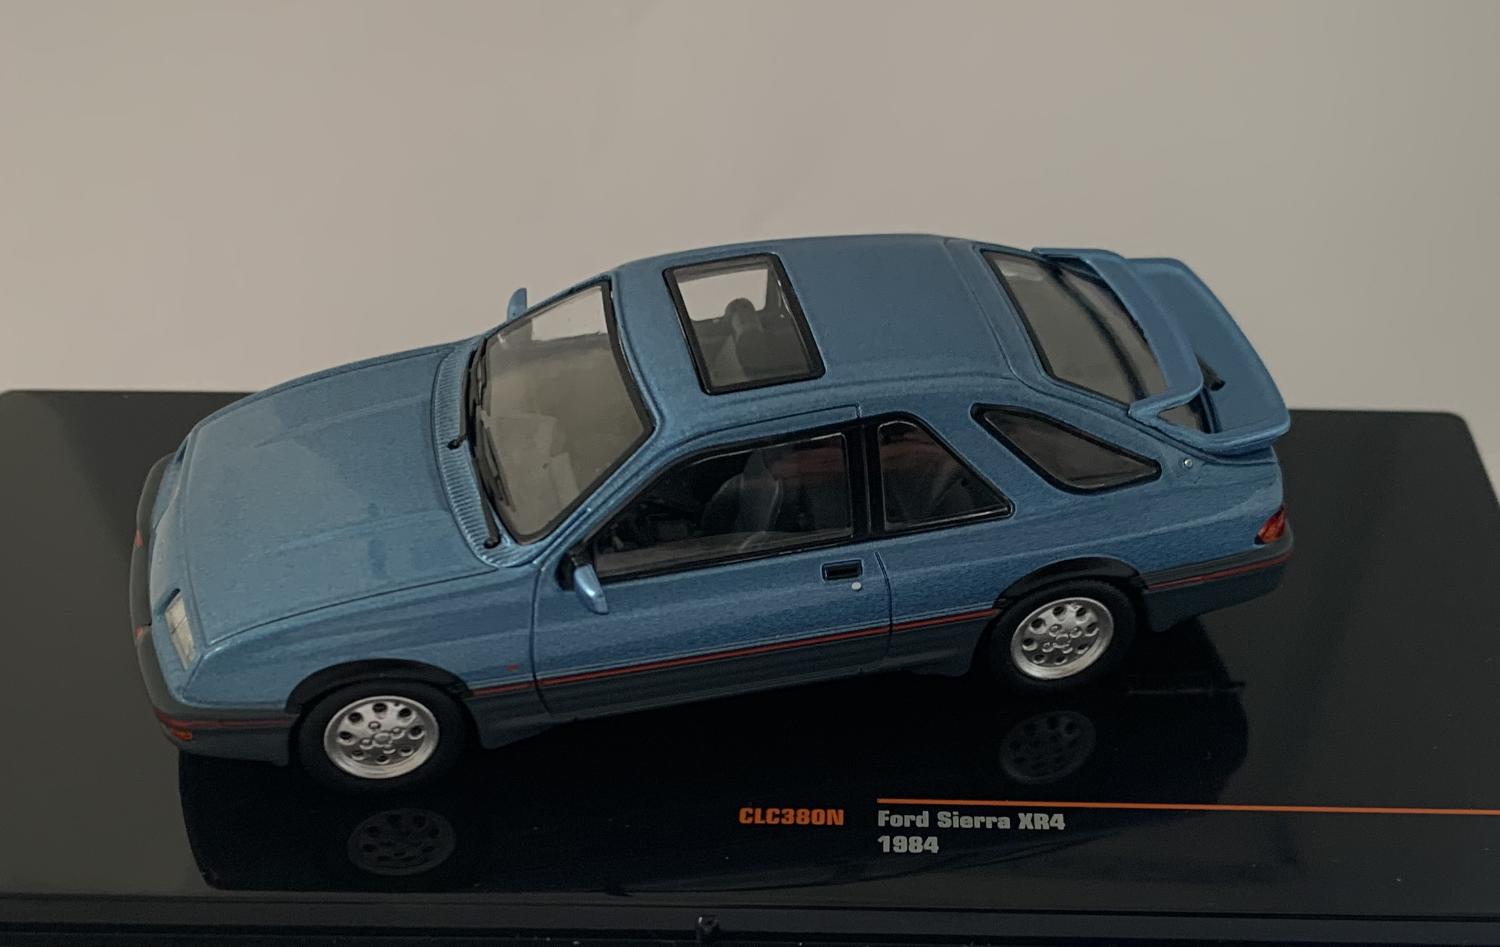 Ford Sierra XR4 1984 in metallic blue 1:43 scale model from IXO, CLC380N